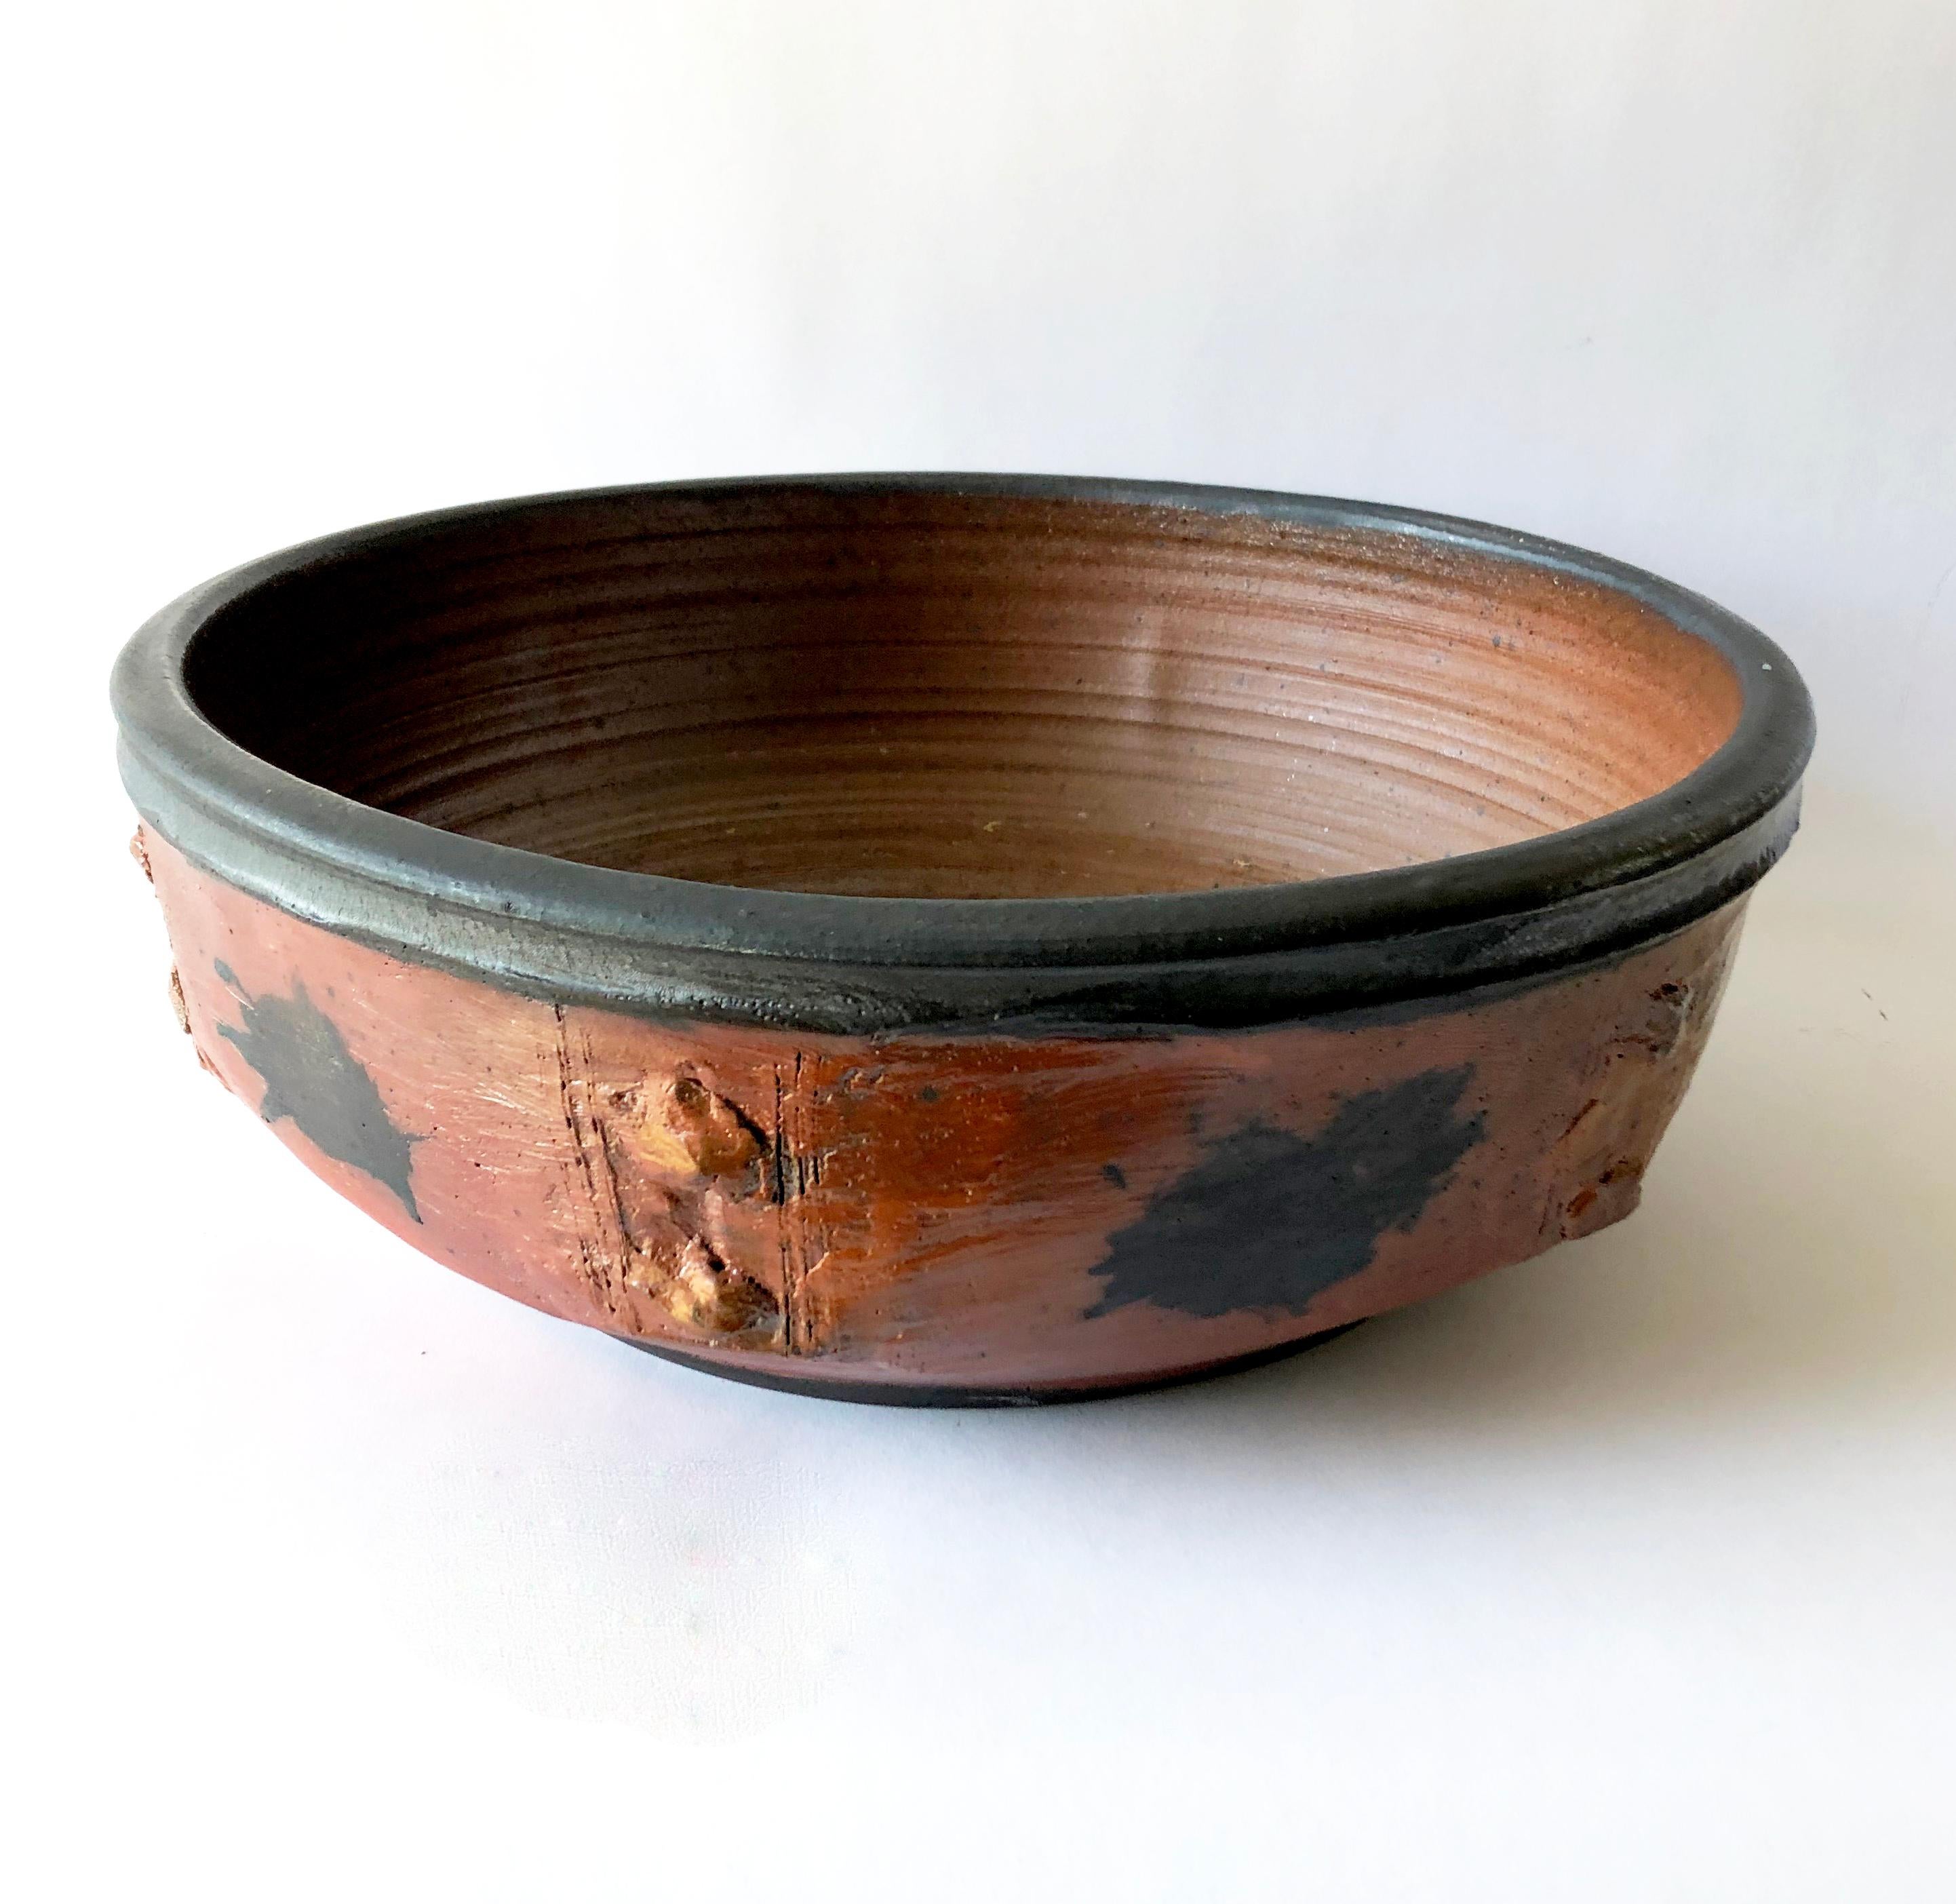 Large scale stoneware bowl created by Otto and Vivika Heino of Ojai, California. Bowl measures 5.5